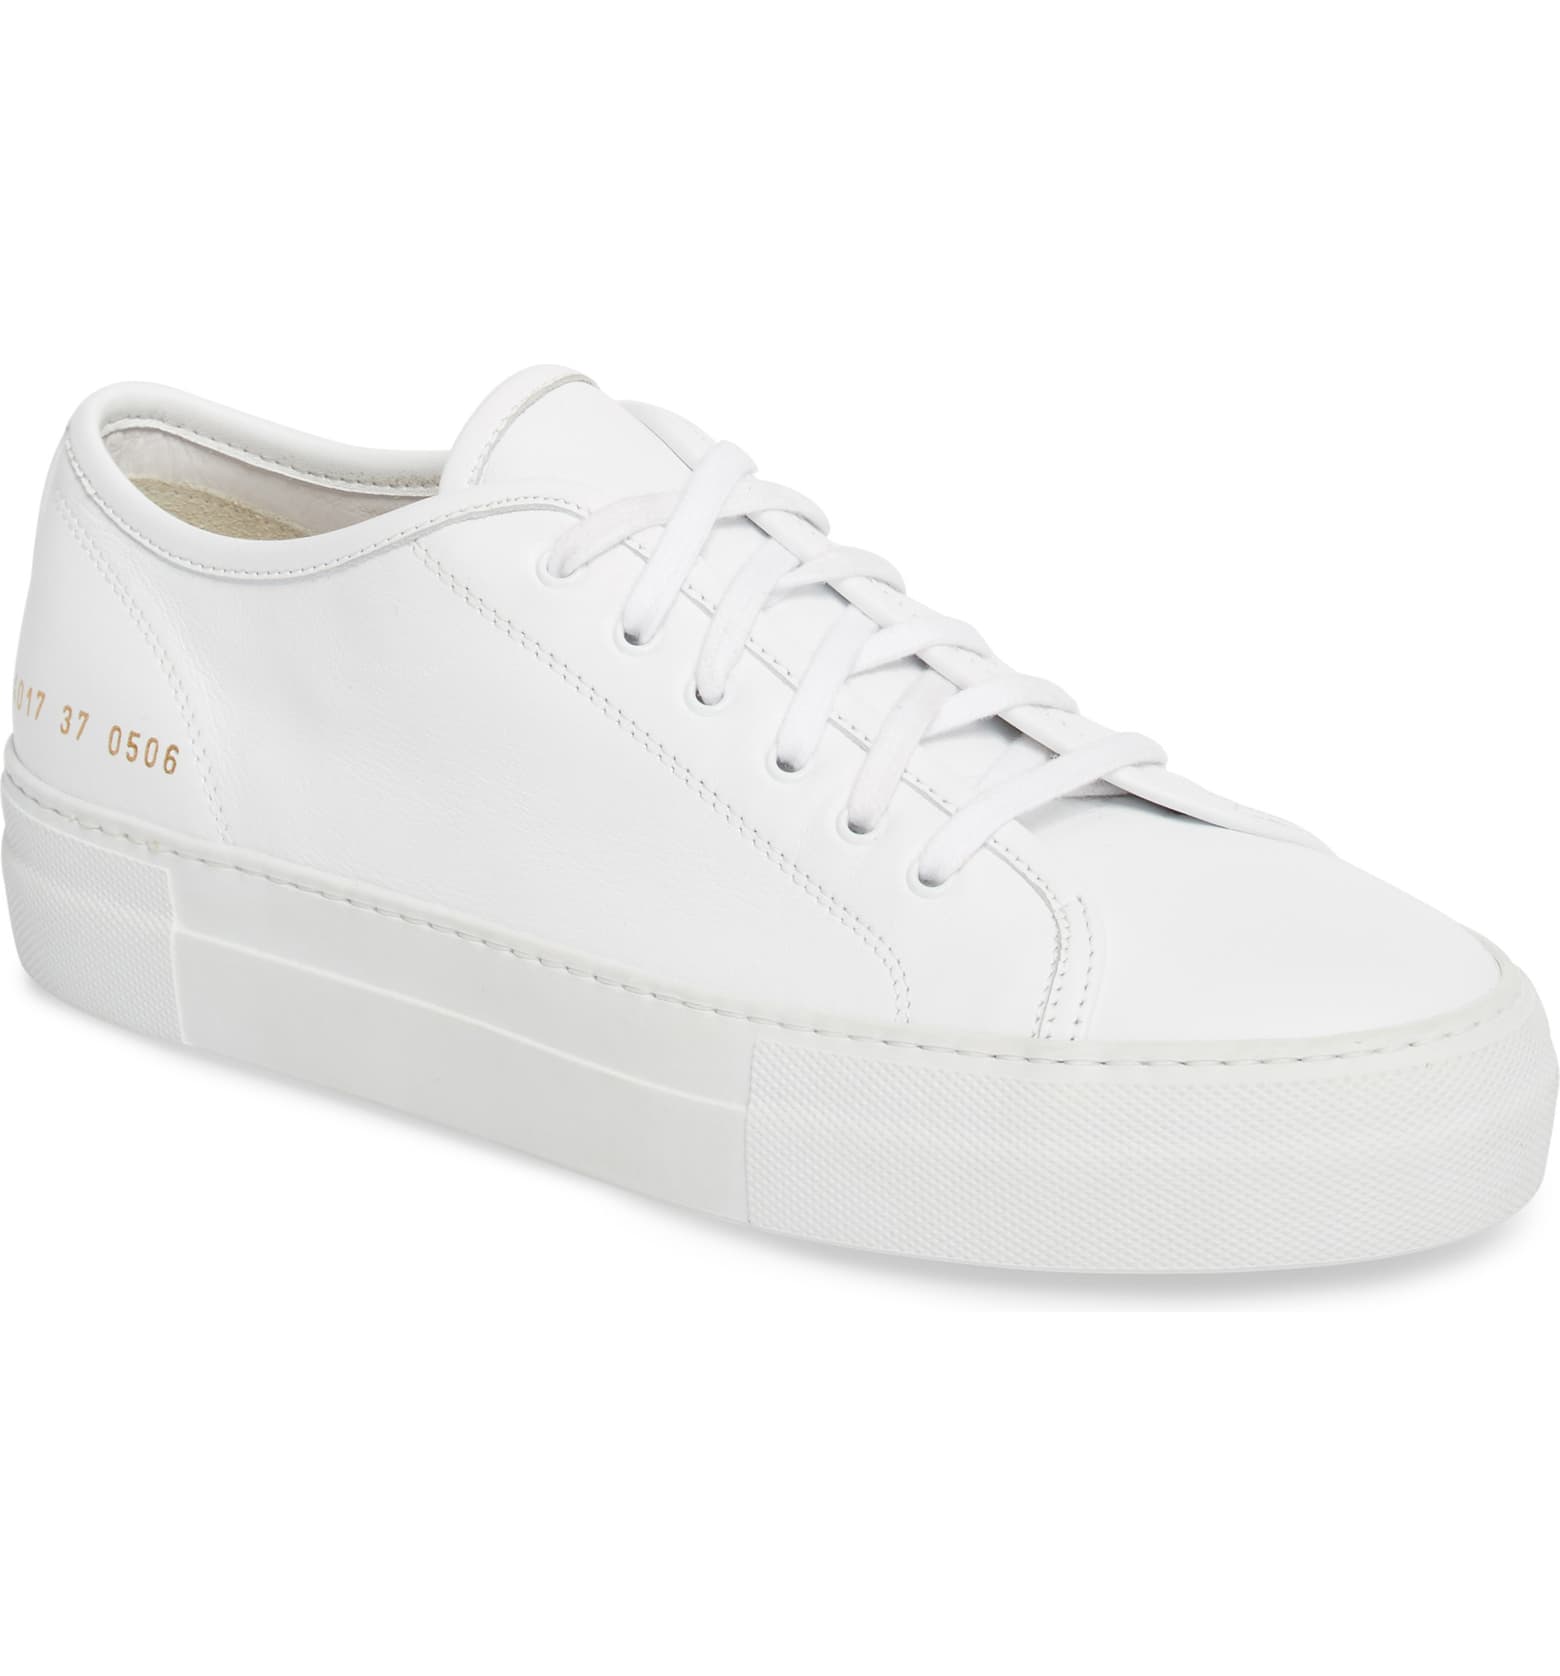 basic white sneakers